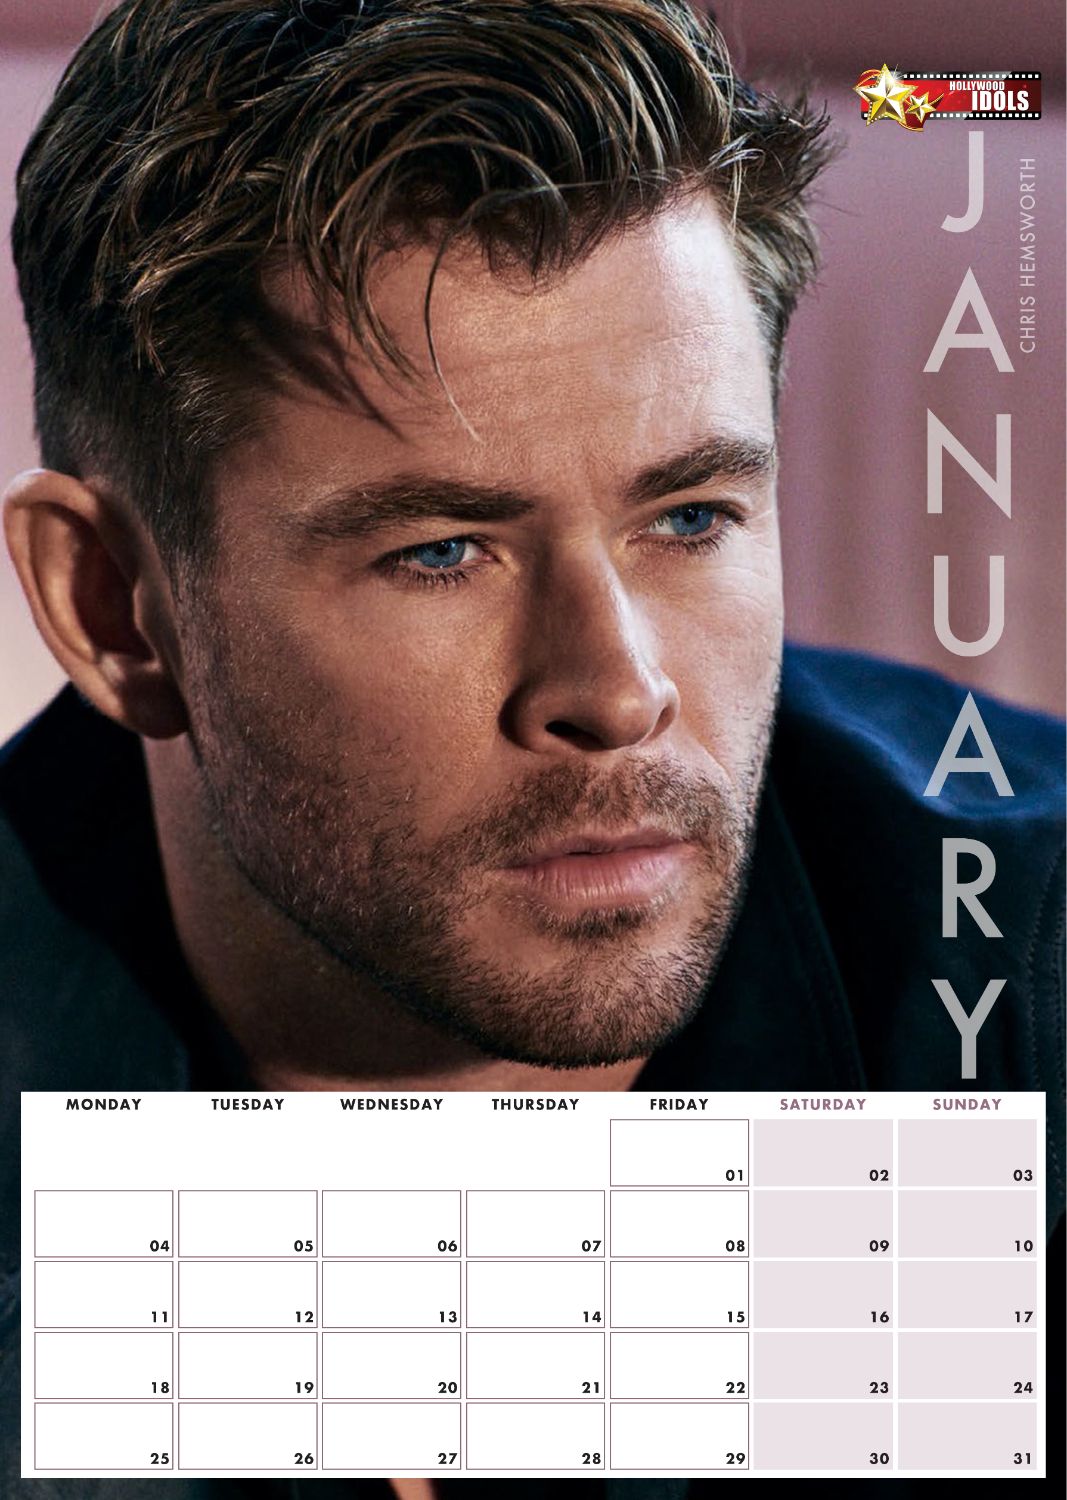 Chris Hemsworth Poster Calendar 2021 | eBay